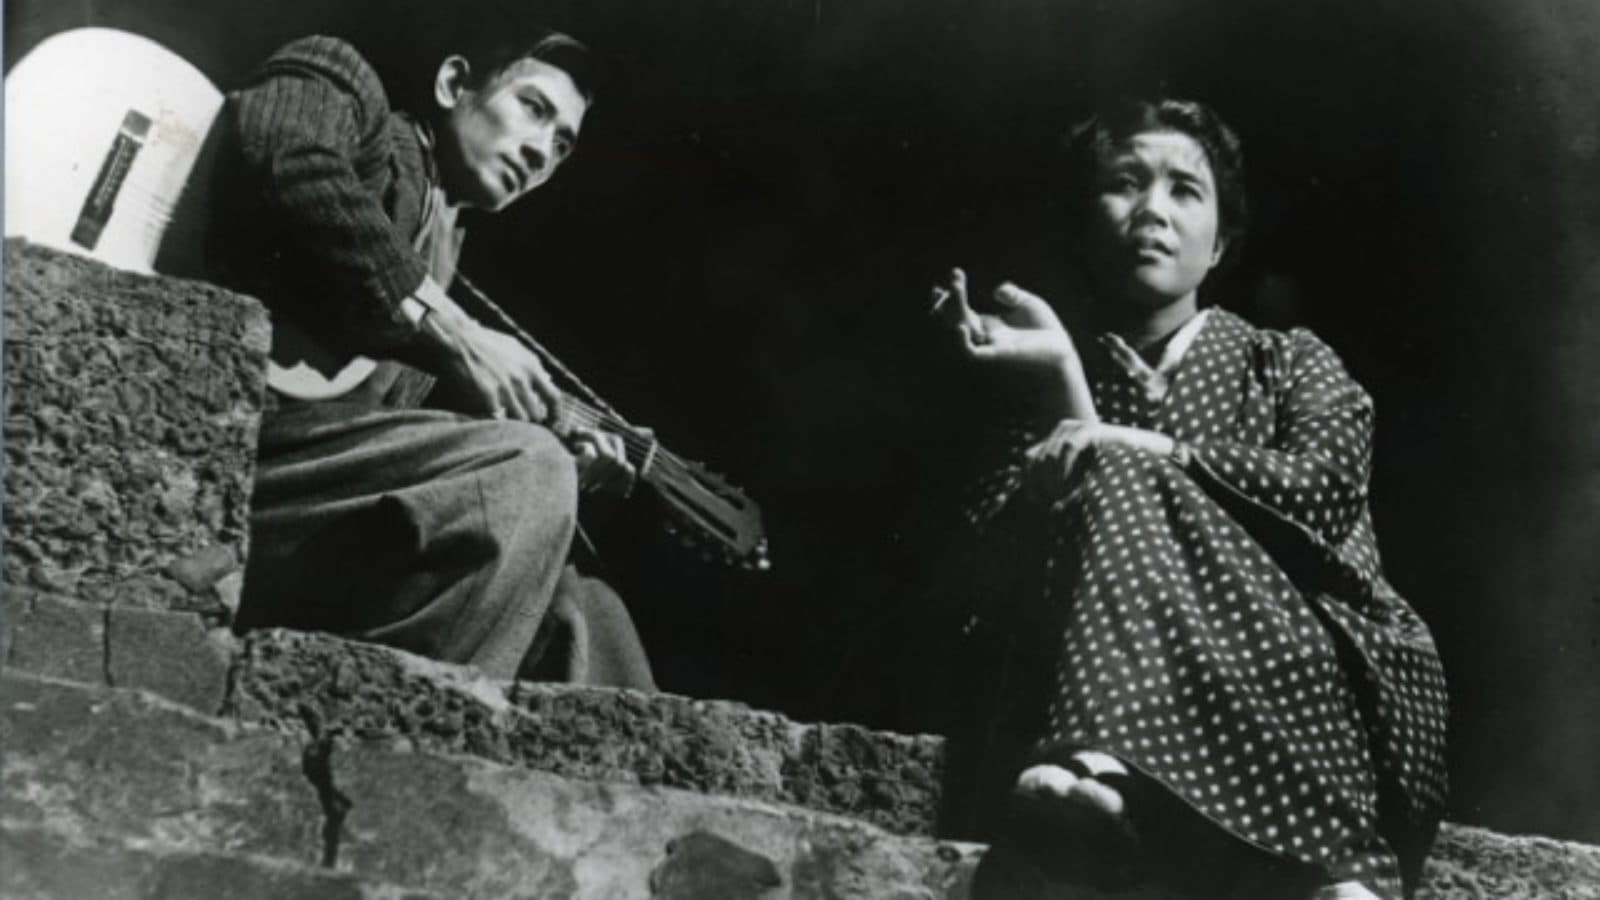 A Japanese Tragedy (1953)